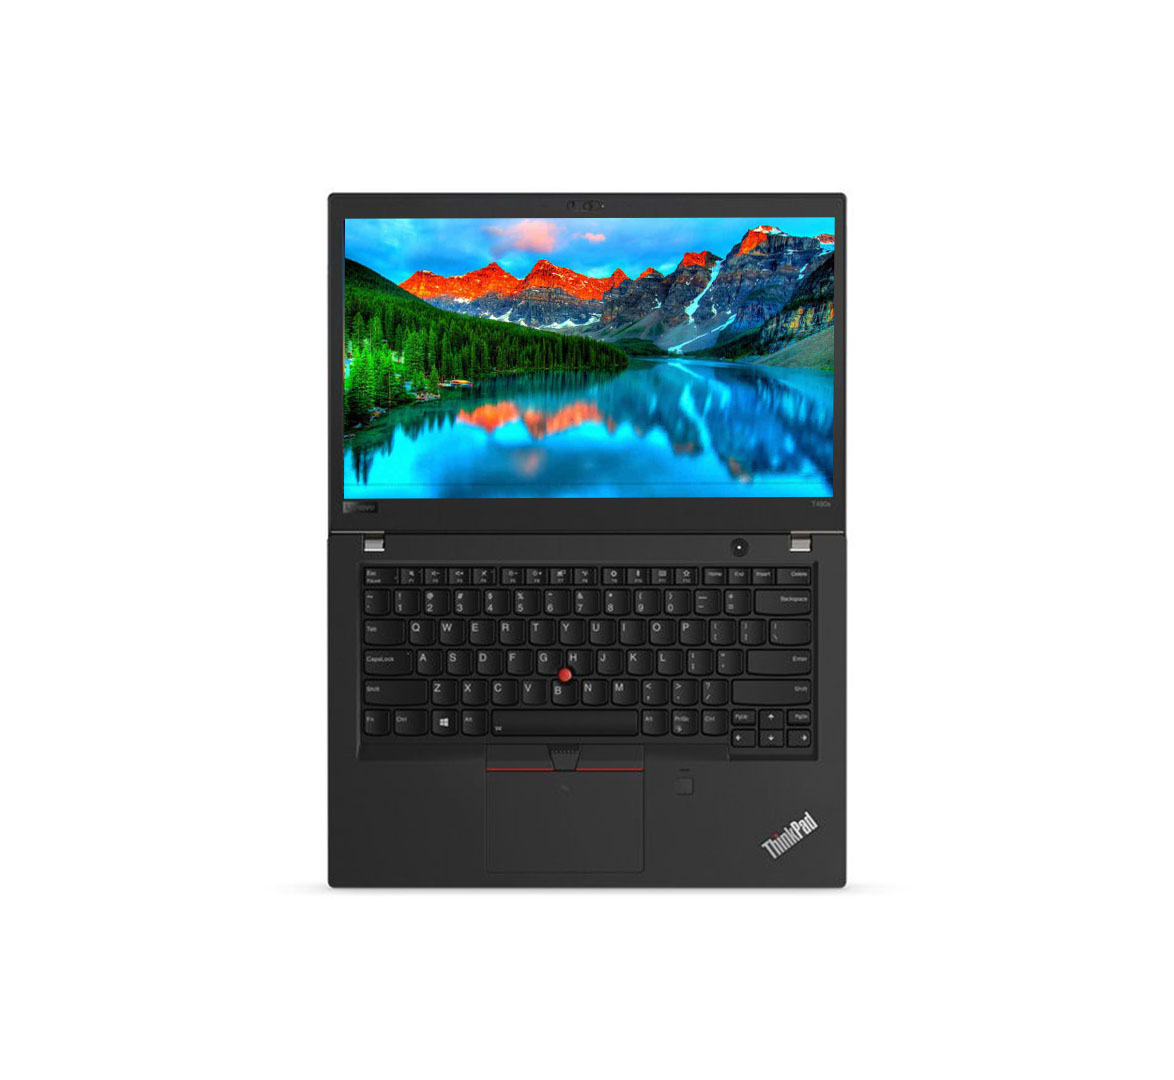 Lenovo ThinkPad T480s Business Laptop, Intel Core i5-8th Generation CPU, 16GB RAM, 512GB SSD, 14 inch Touchscreen Display, Windows 10 Pro